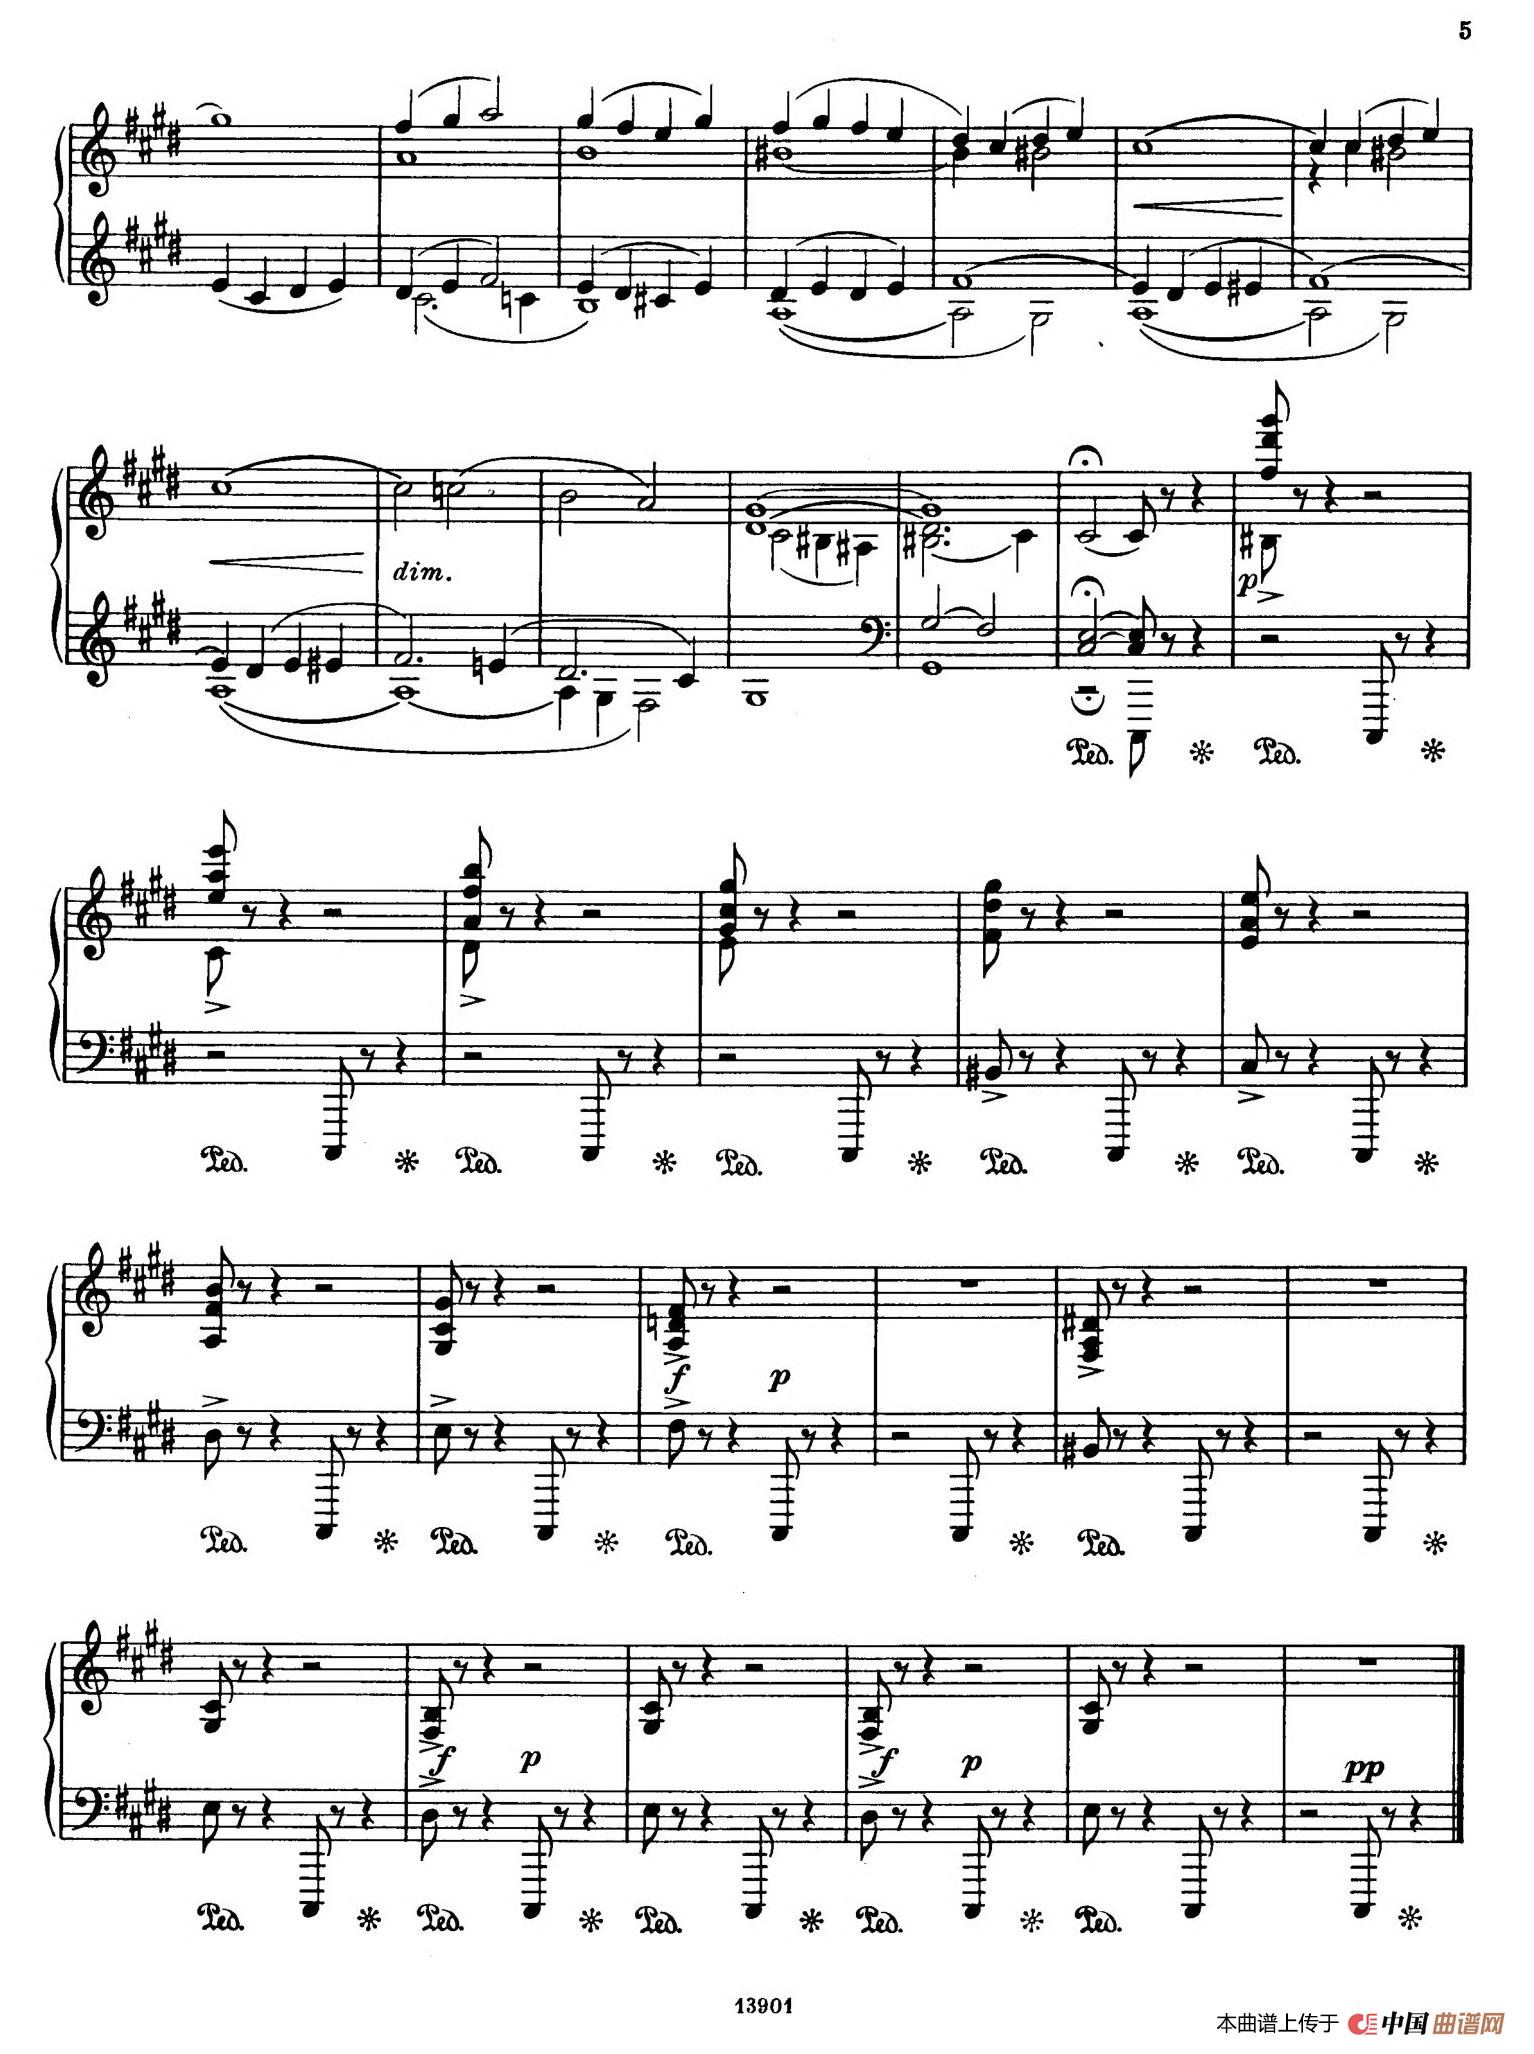 《Little Suite》钢琴曲谱图分享